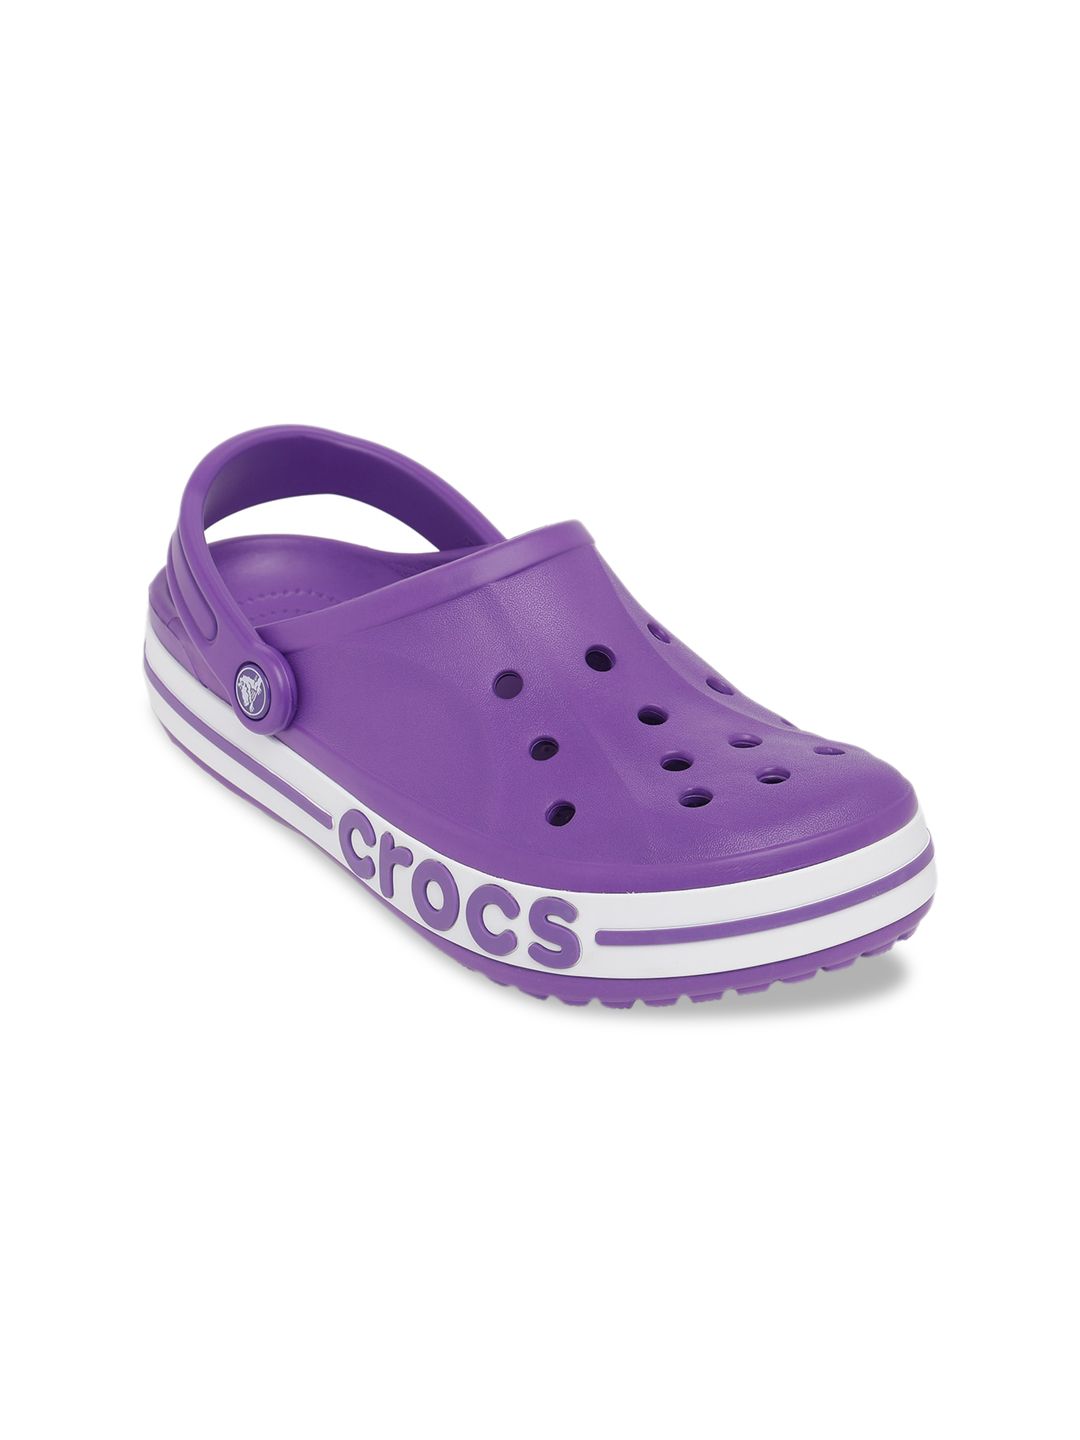 Crocs Bayaband  Adult Purple Clogs Price in India